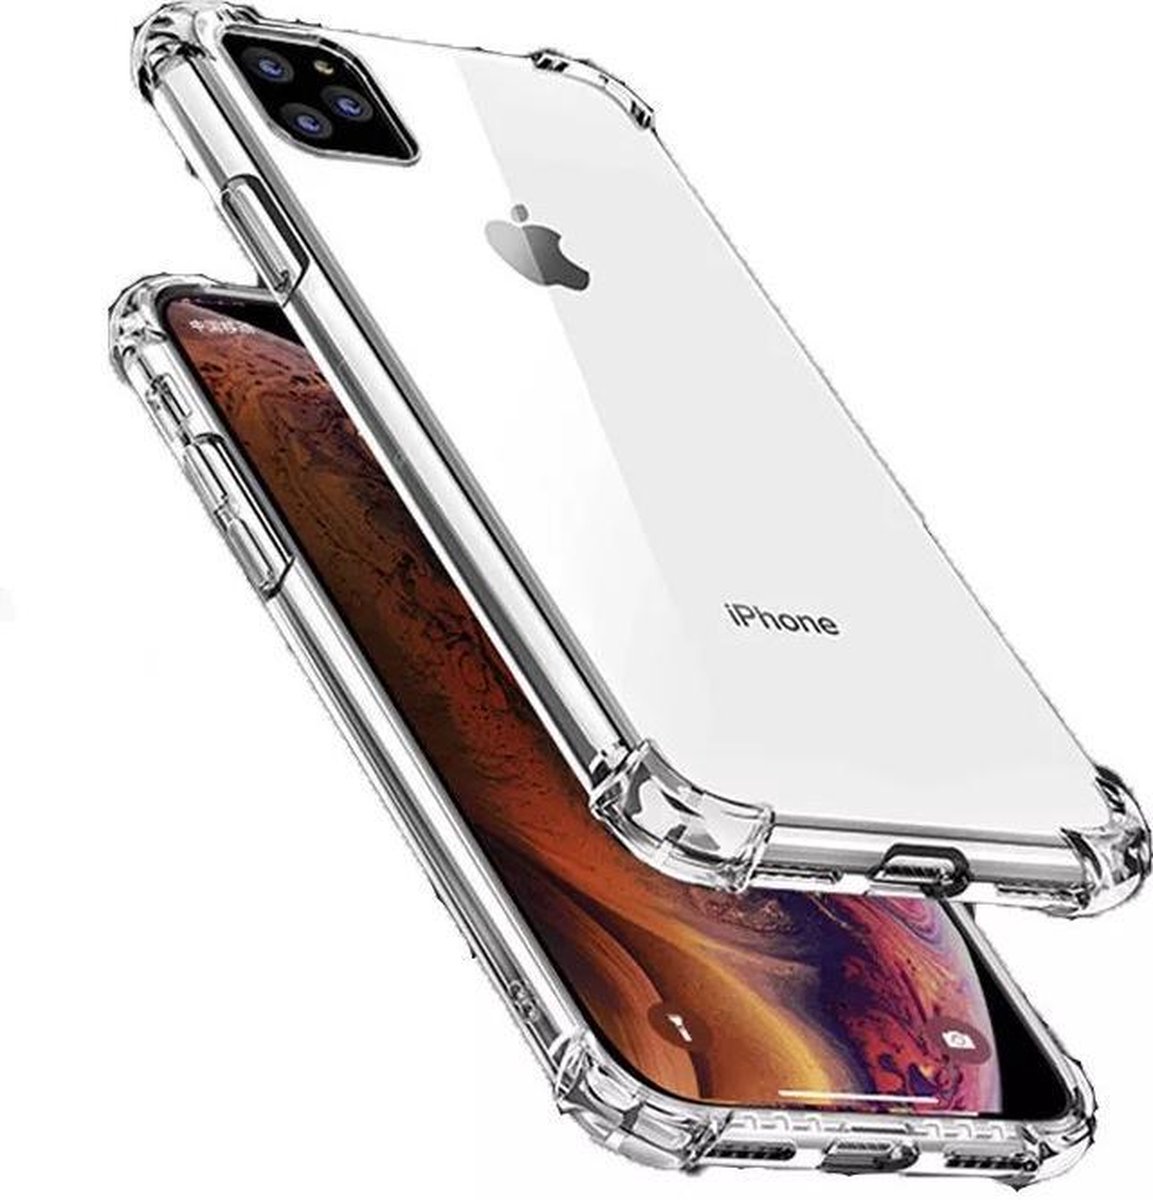 IPhone 11 hoesje ( Transparant) de beste bescherming